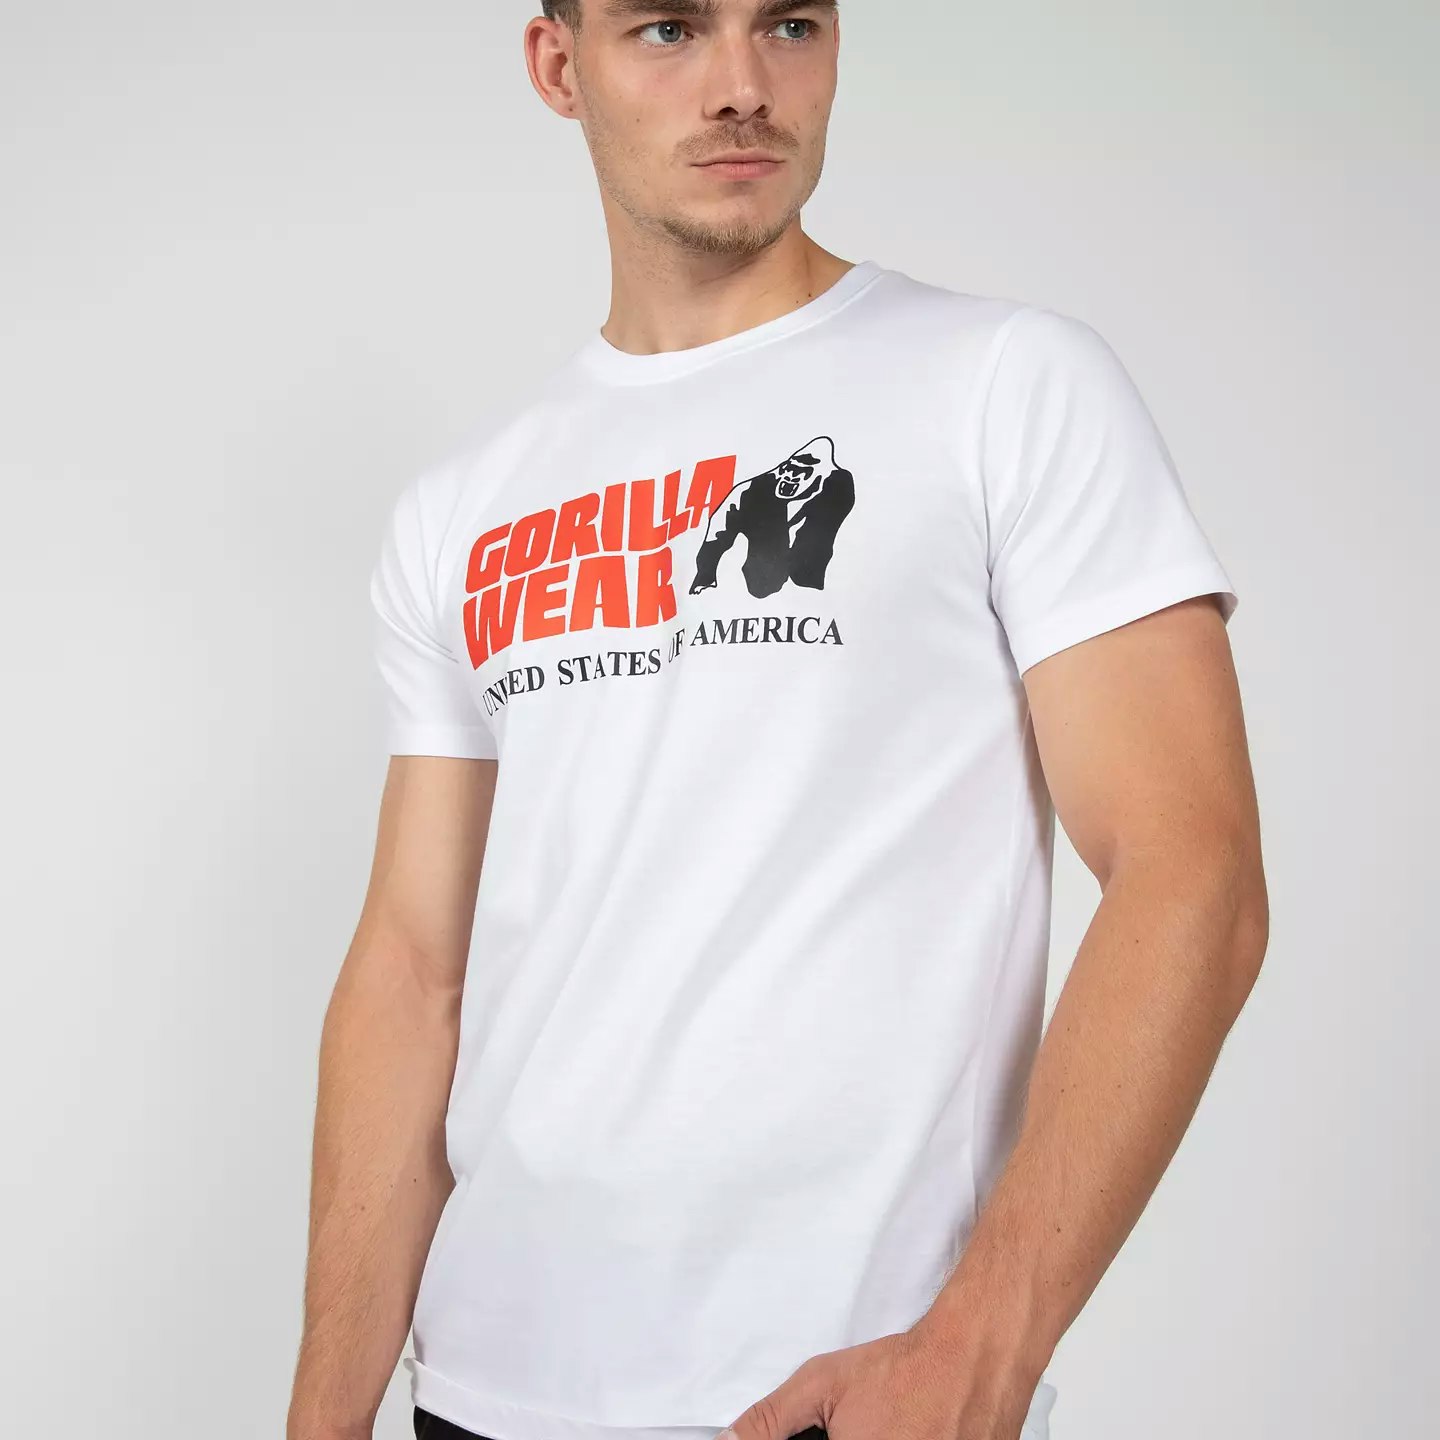 Gorilla Wear - Classic T-Shirt, white